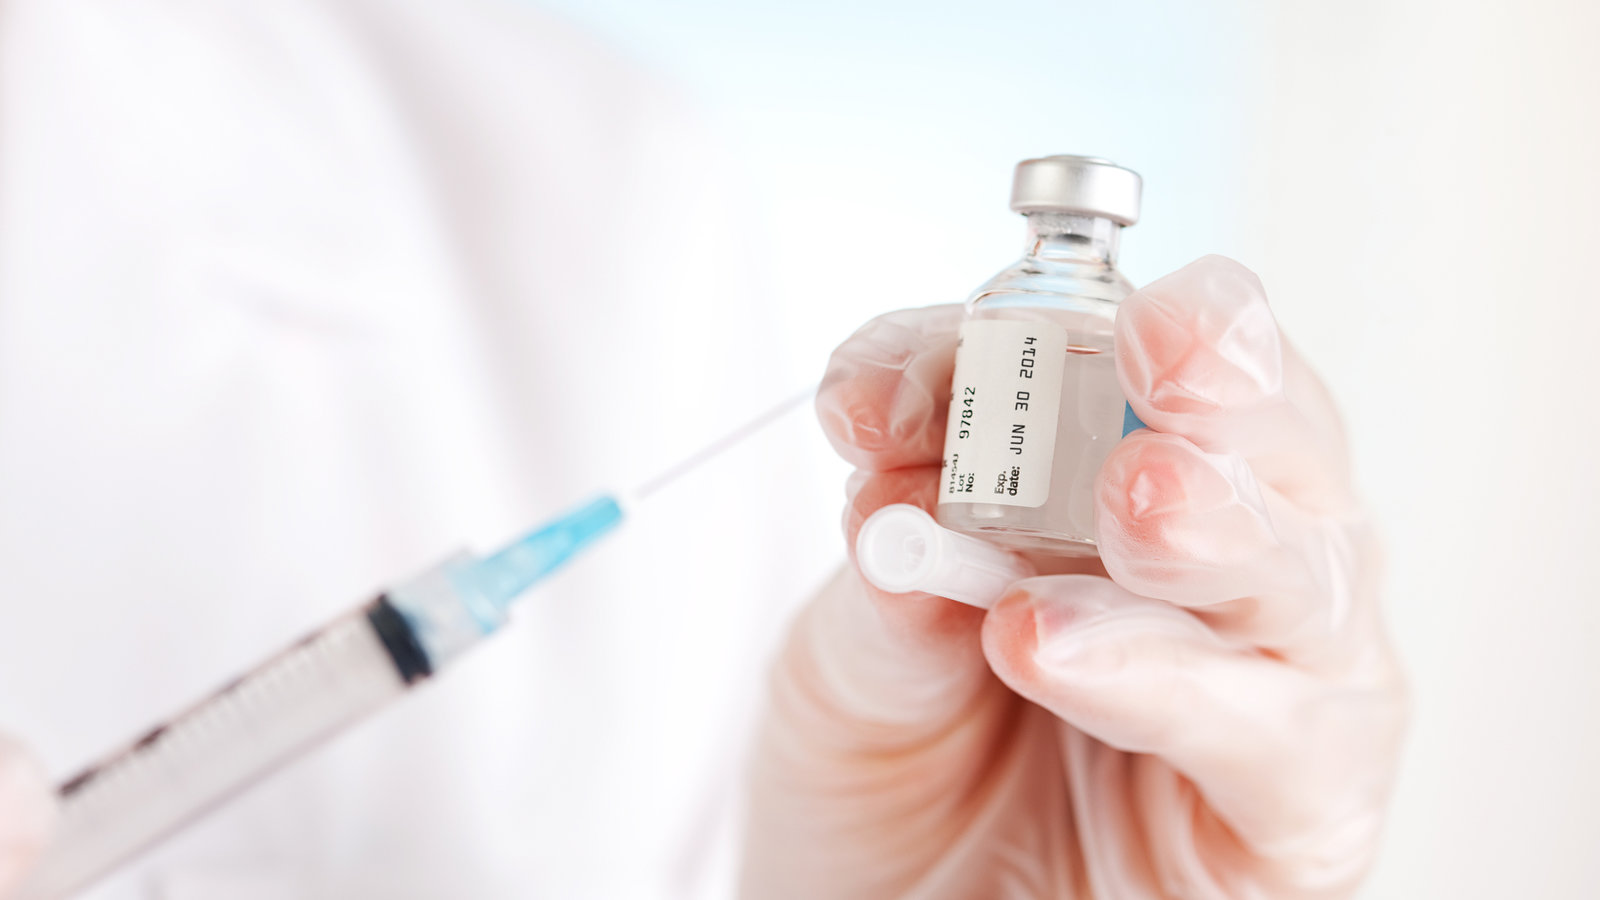 DDR-vaccin-grippe